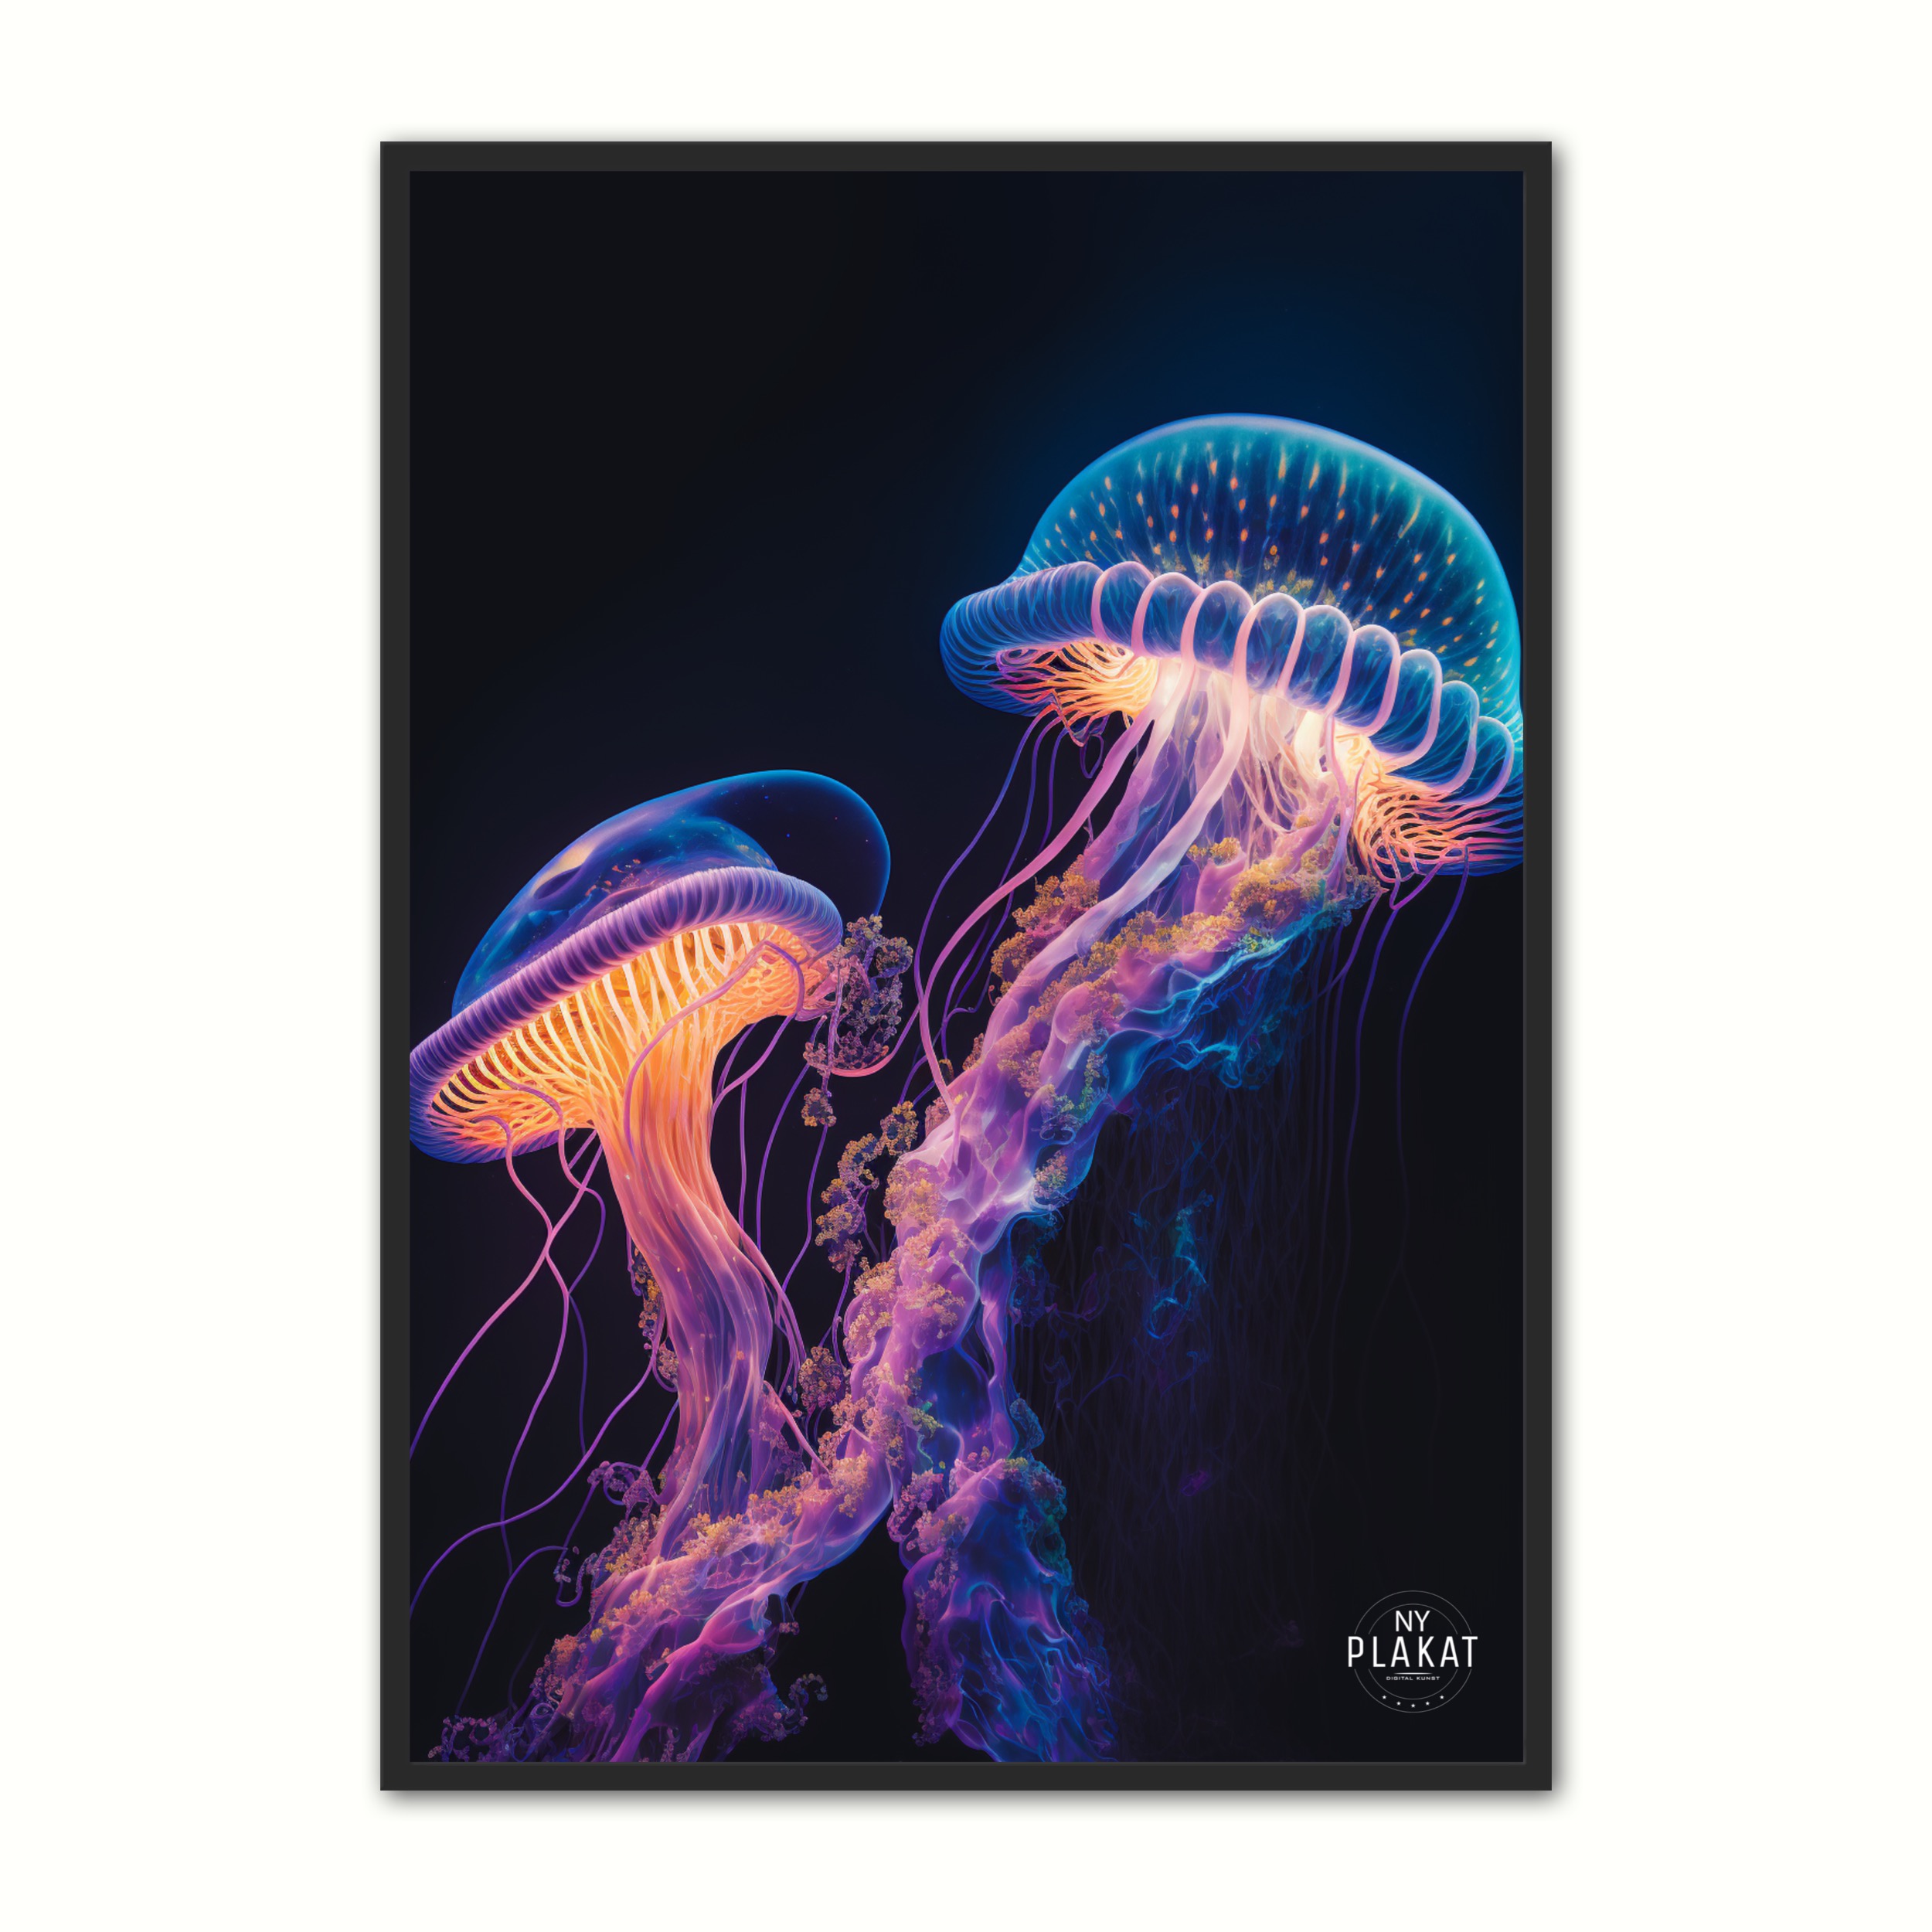 Se Jellyfish plakat No. 4 30 x 40 cm hos Nyplakat.dk